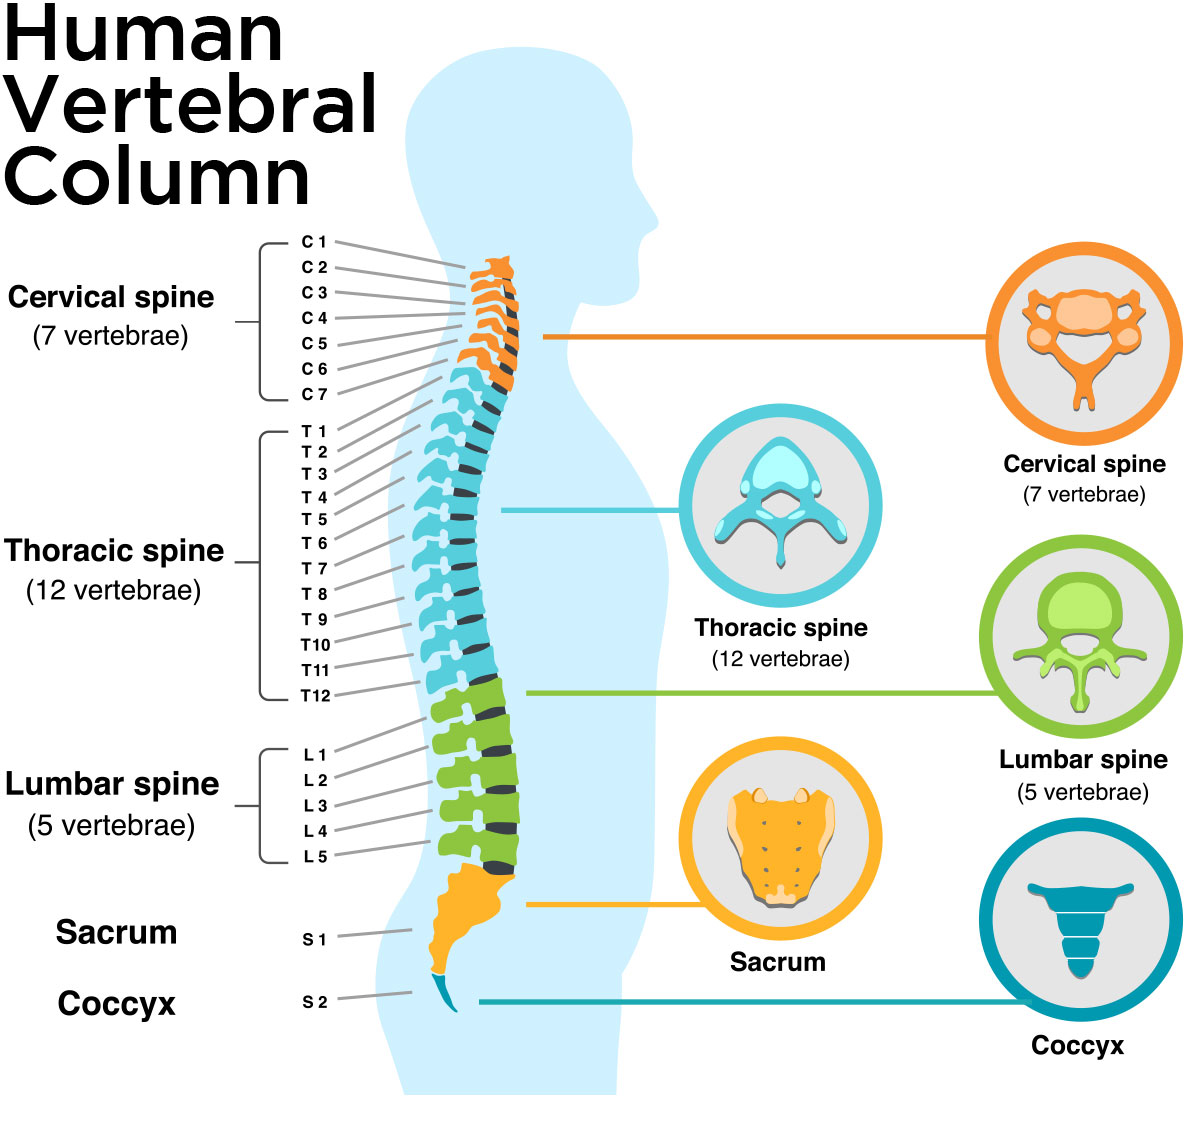 Human Vertebral Column